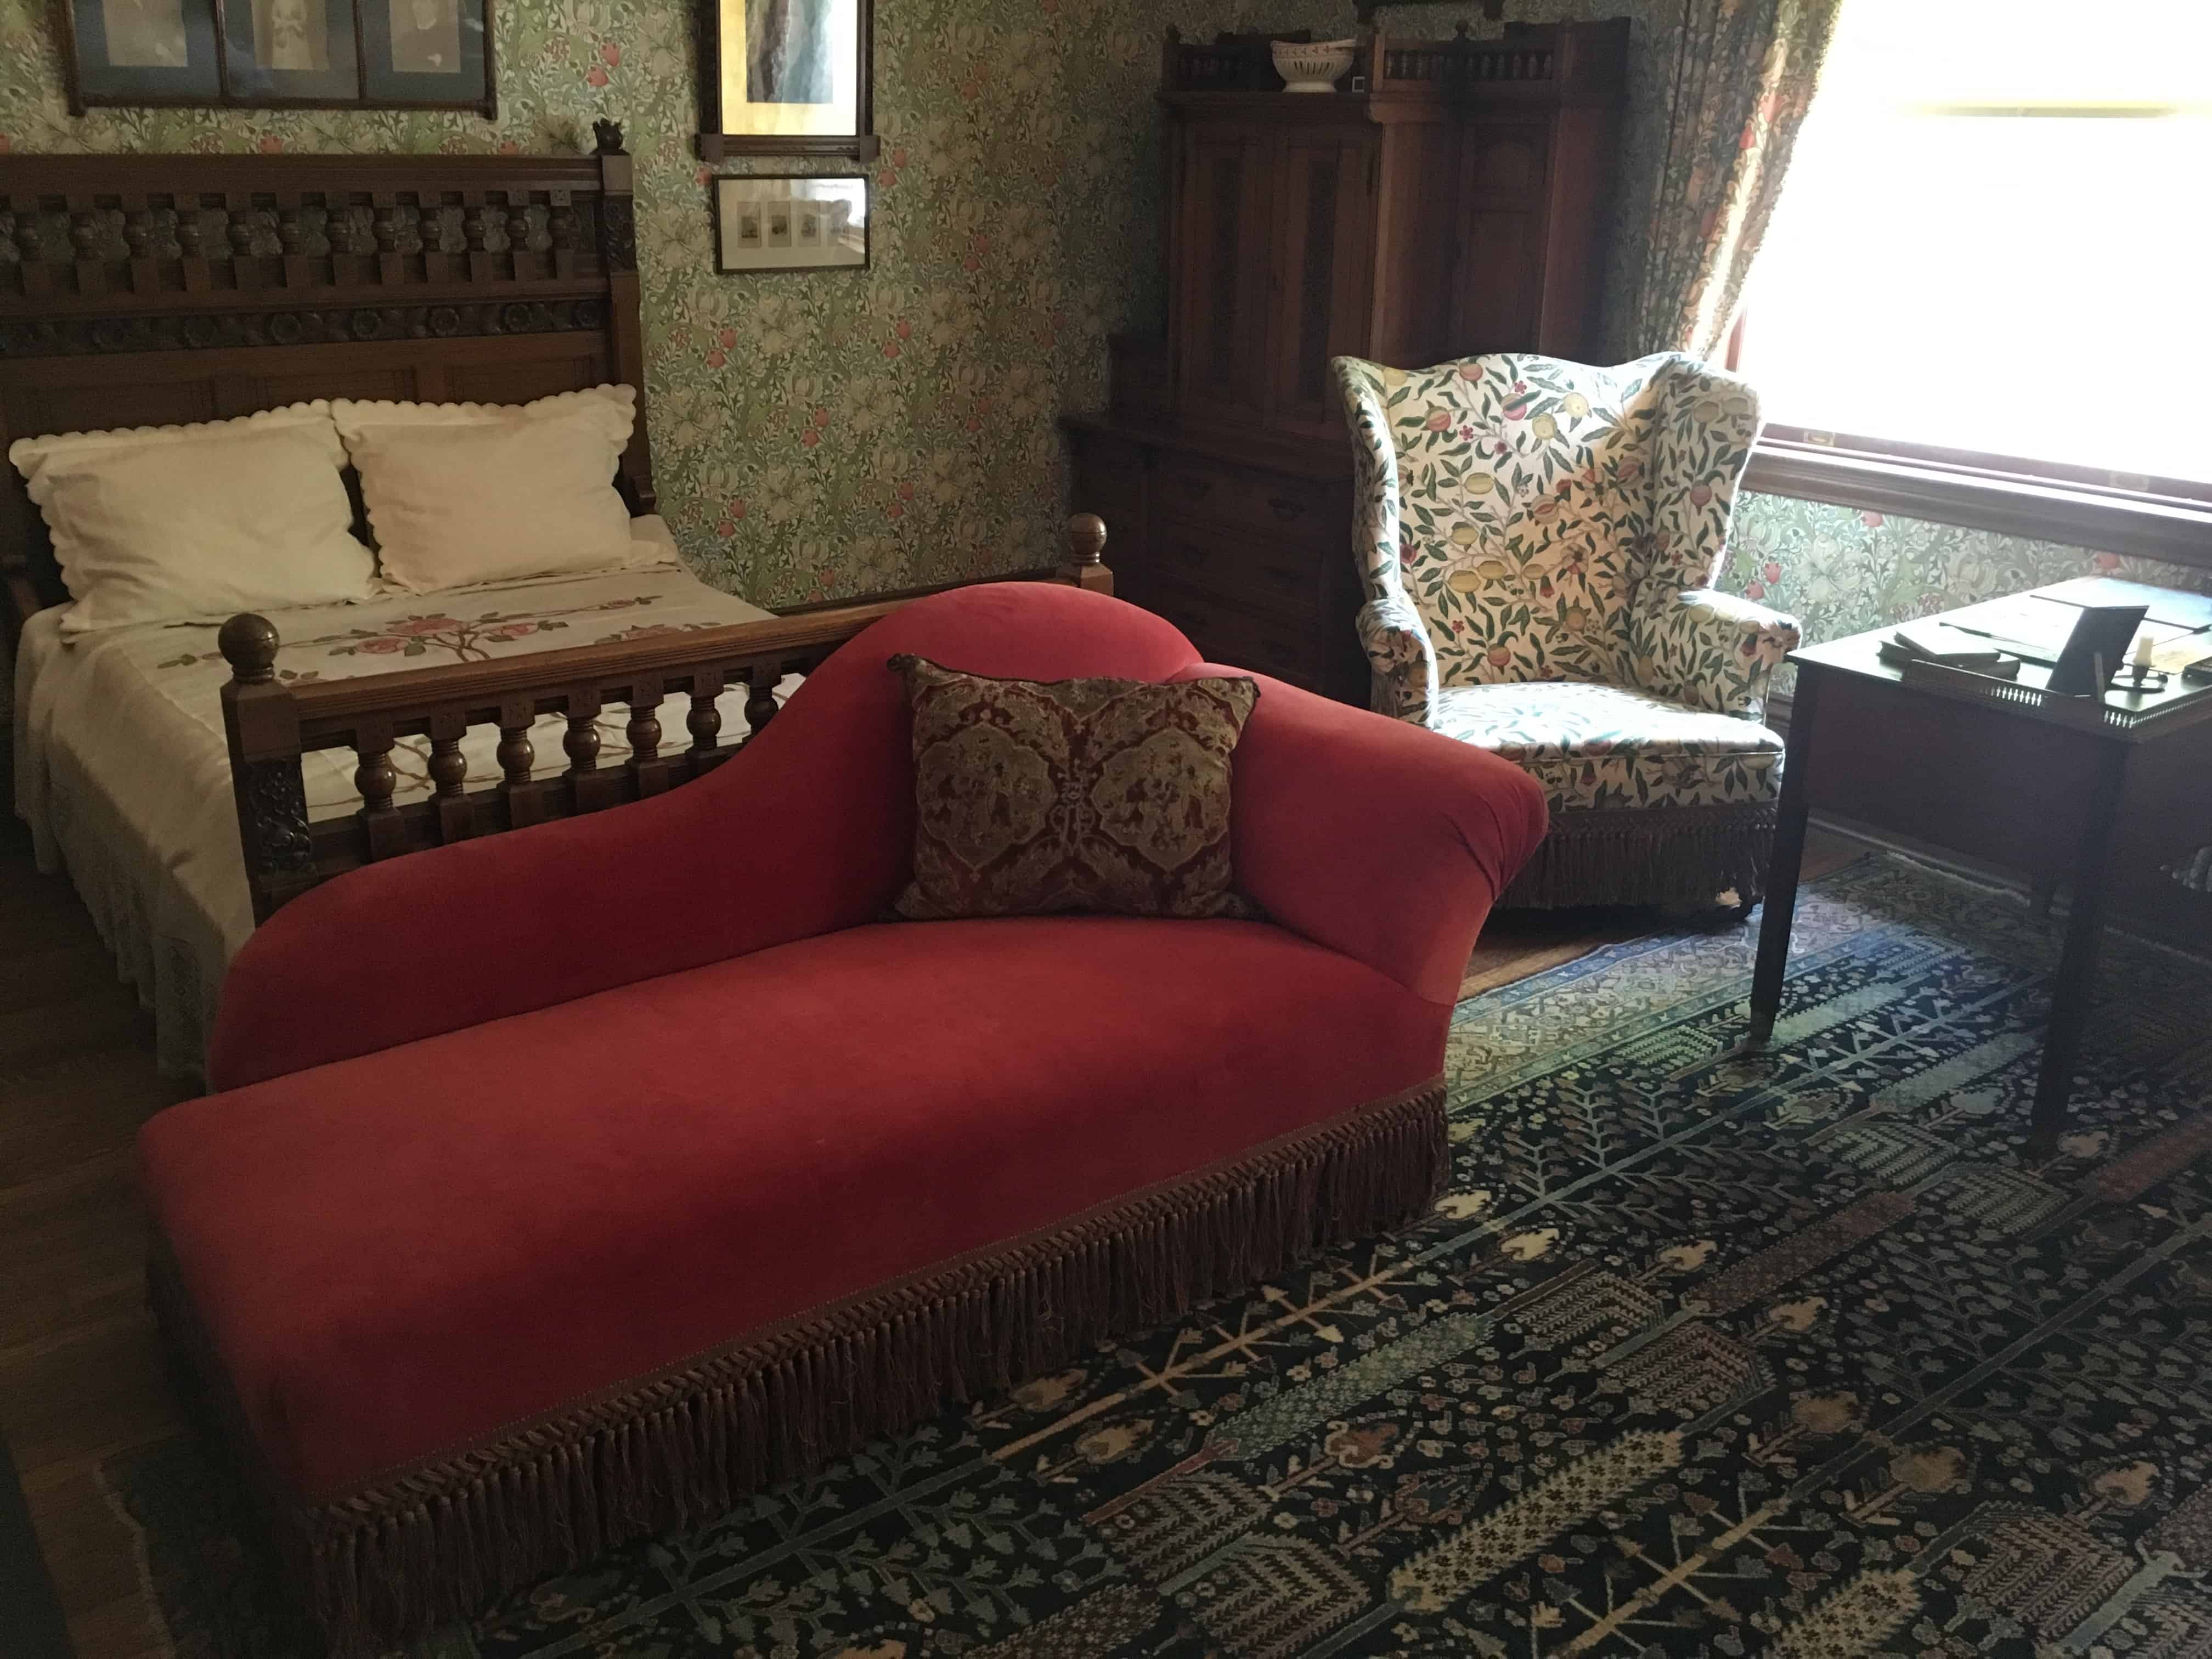 Master bedroom at the John J. Glessner House in Chicago, Illinois